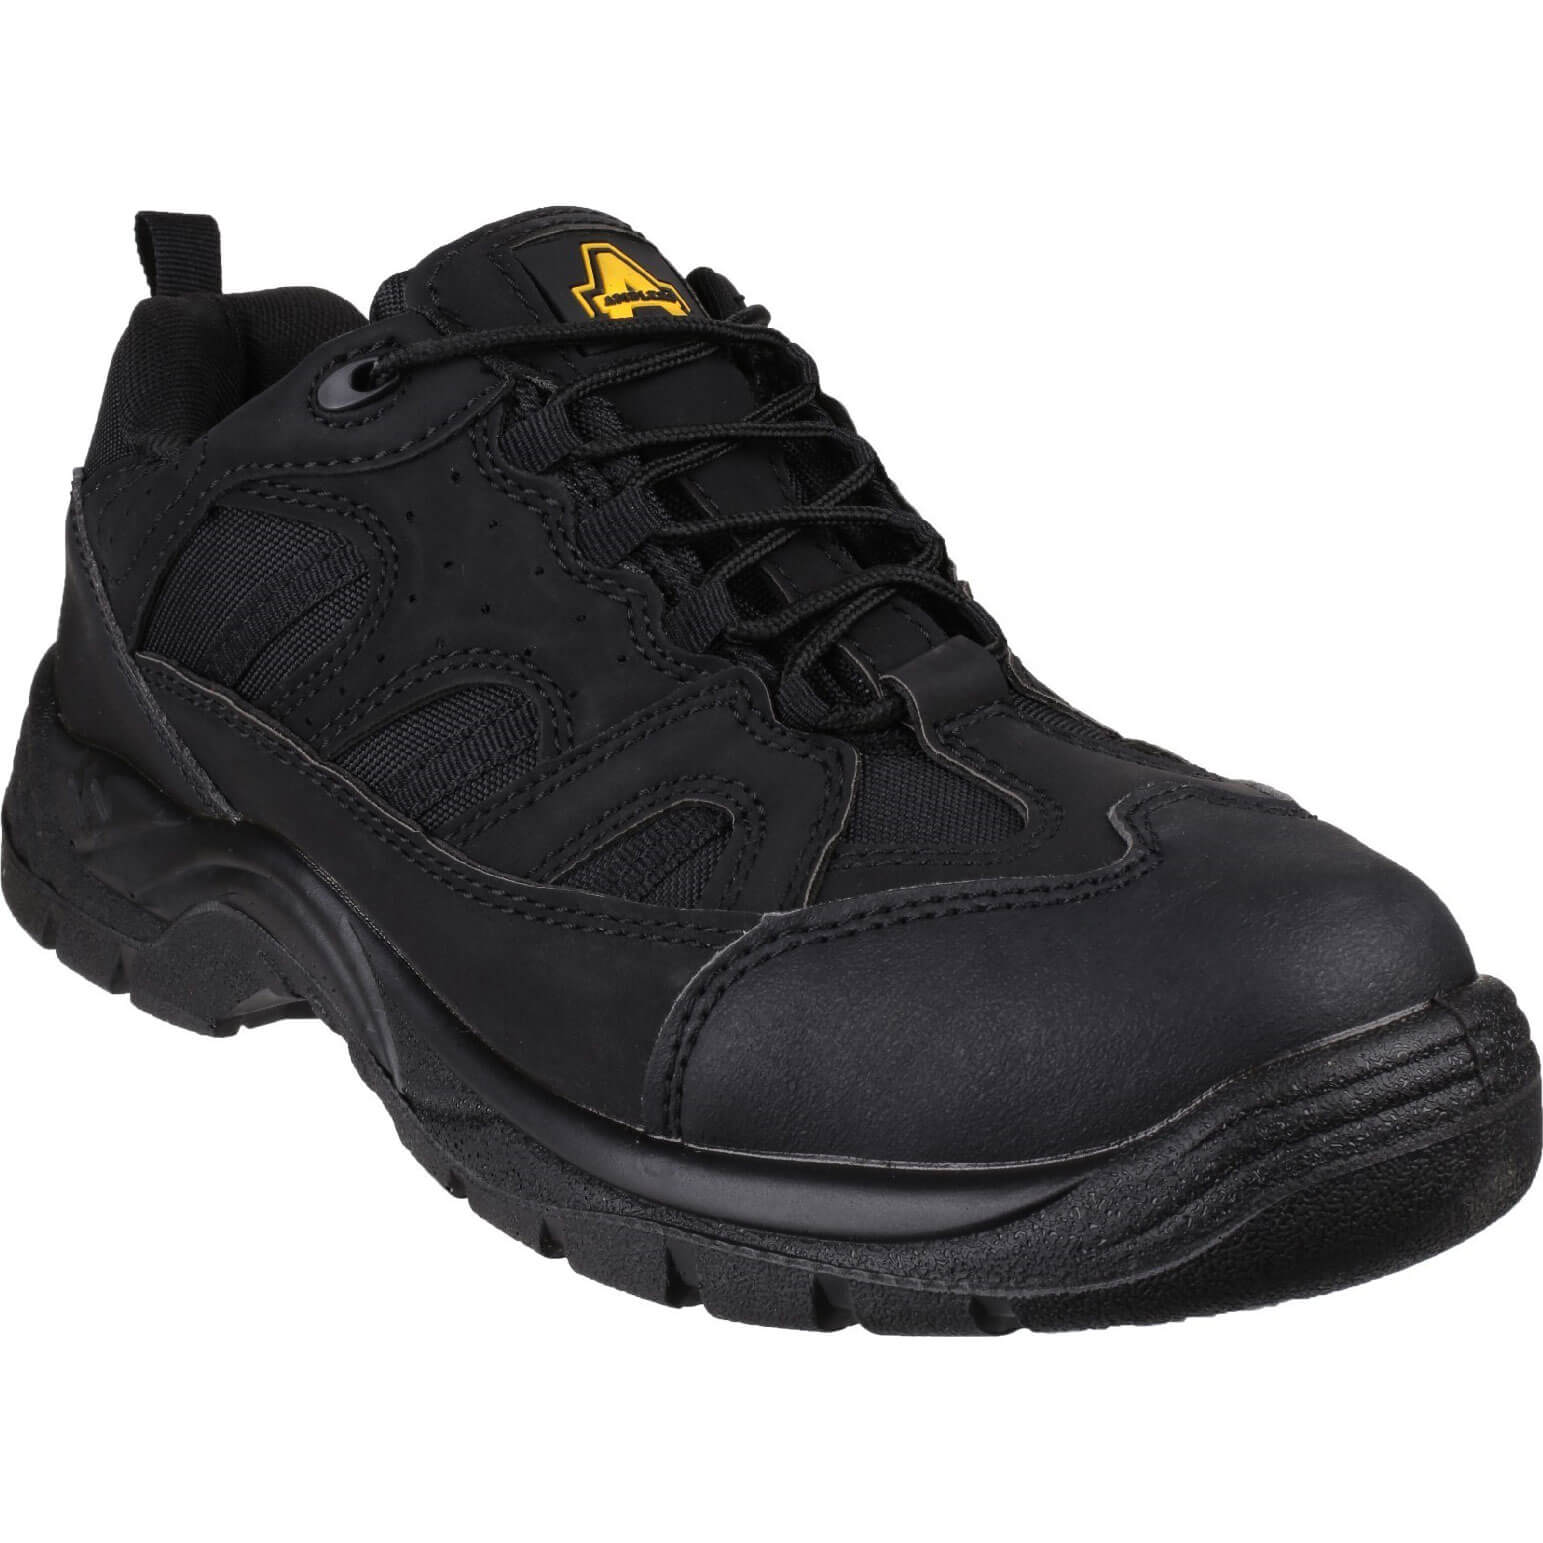 Image of Amblers Safety FS214 Vegan Friendly Safety Shoes Black Size 4